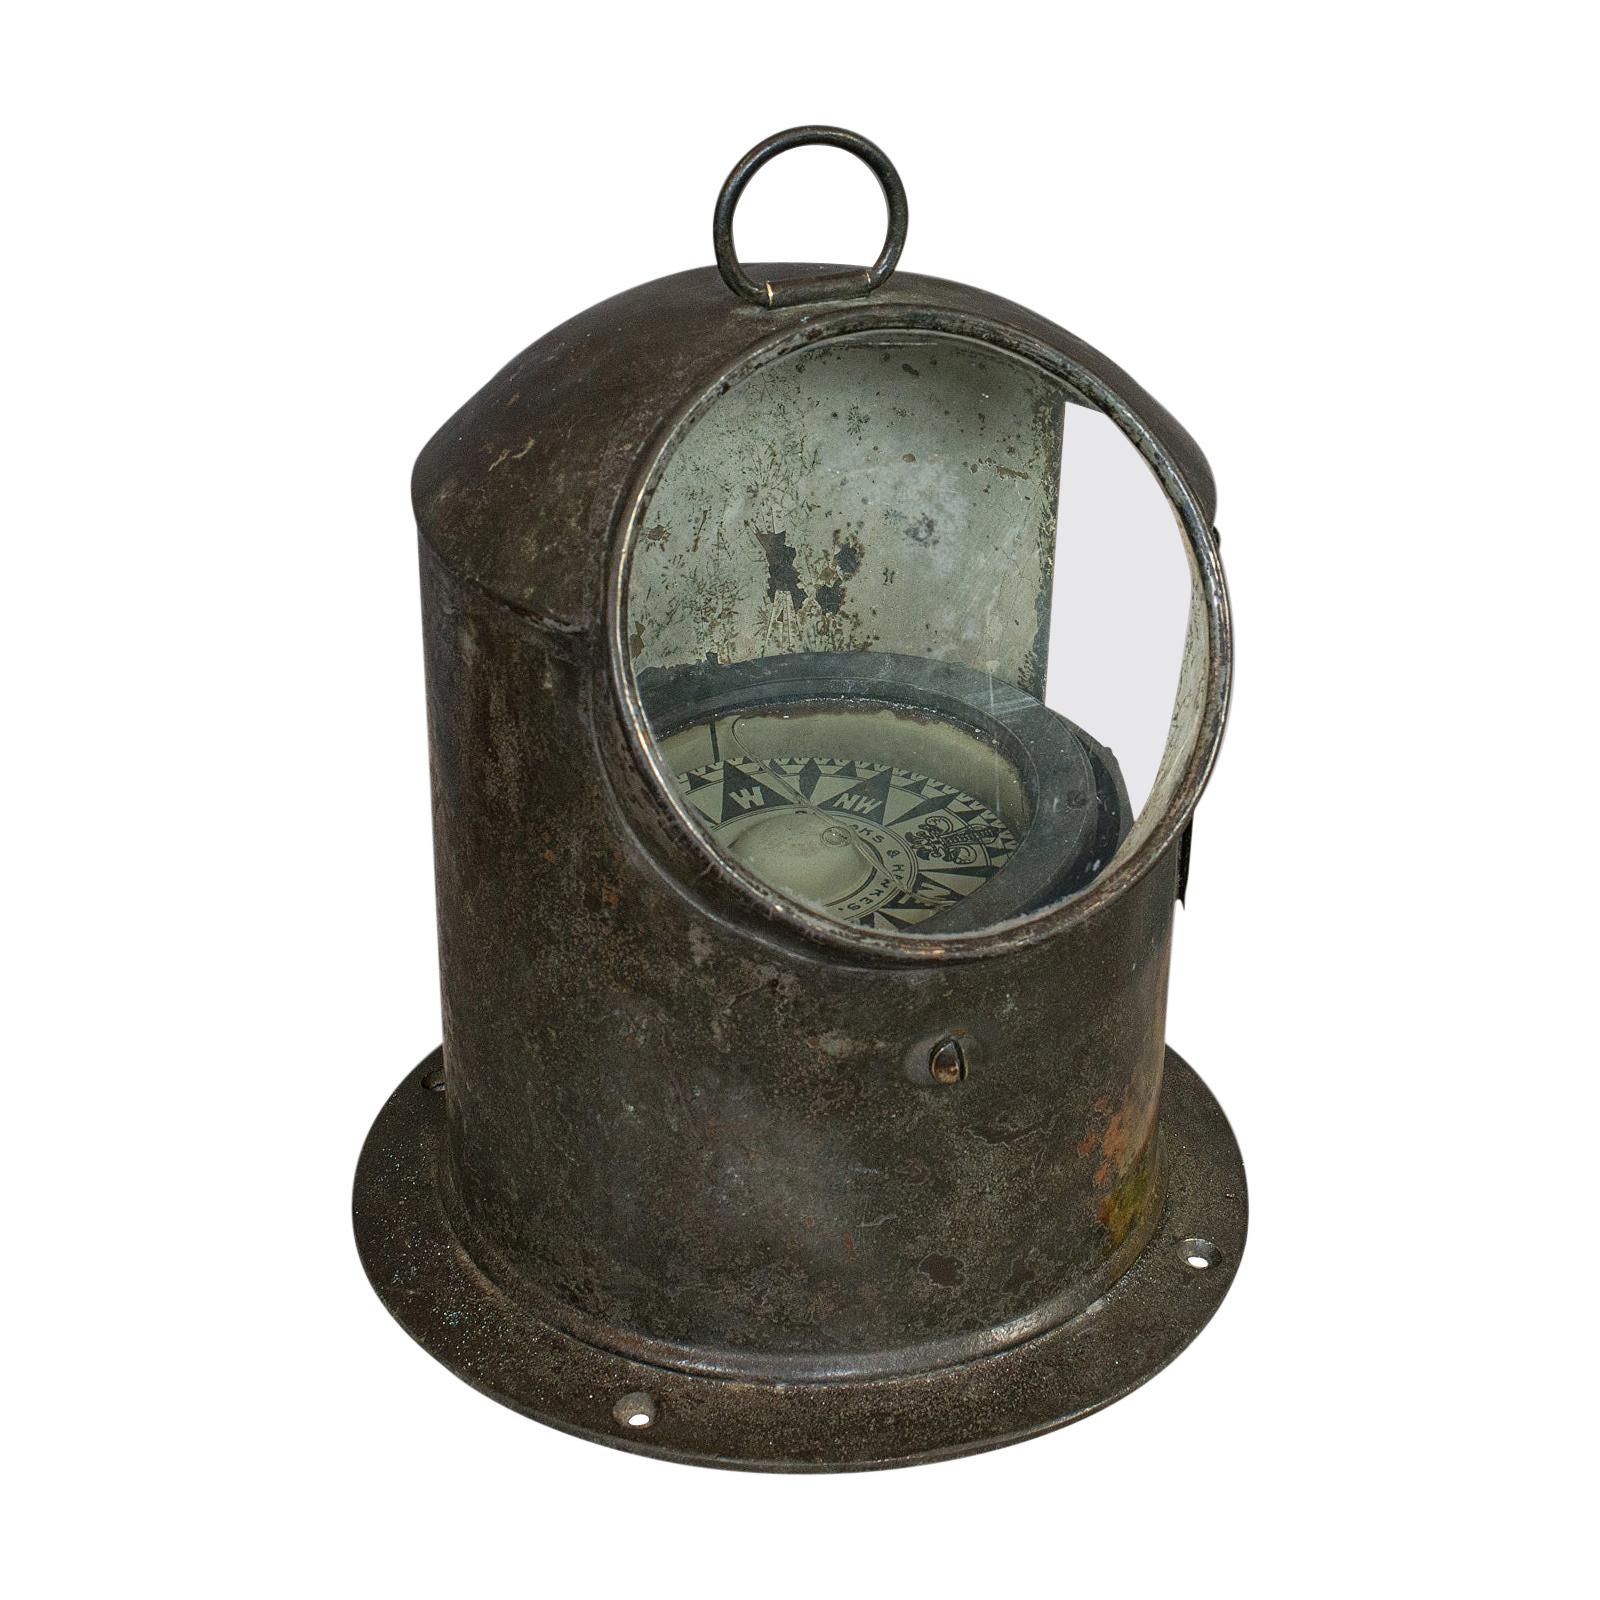 Vintage Binnacle Compass, English, Brass, Maritime, Navigation, Instrument